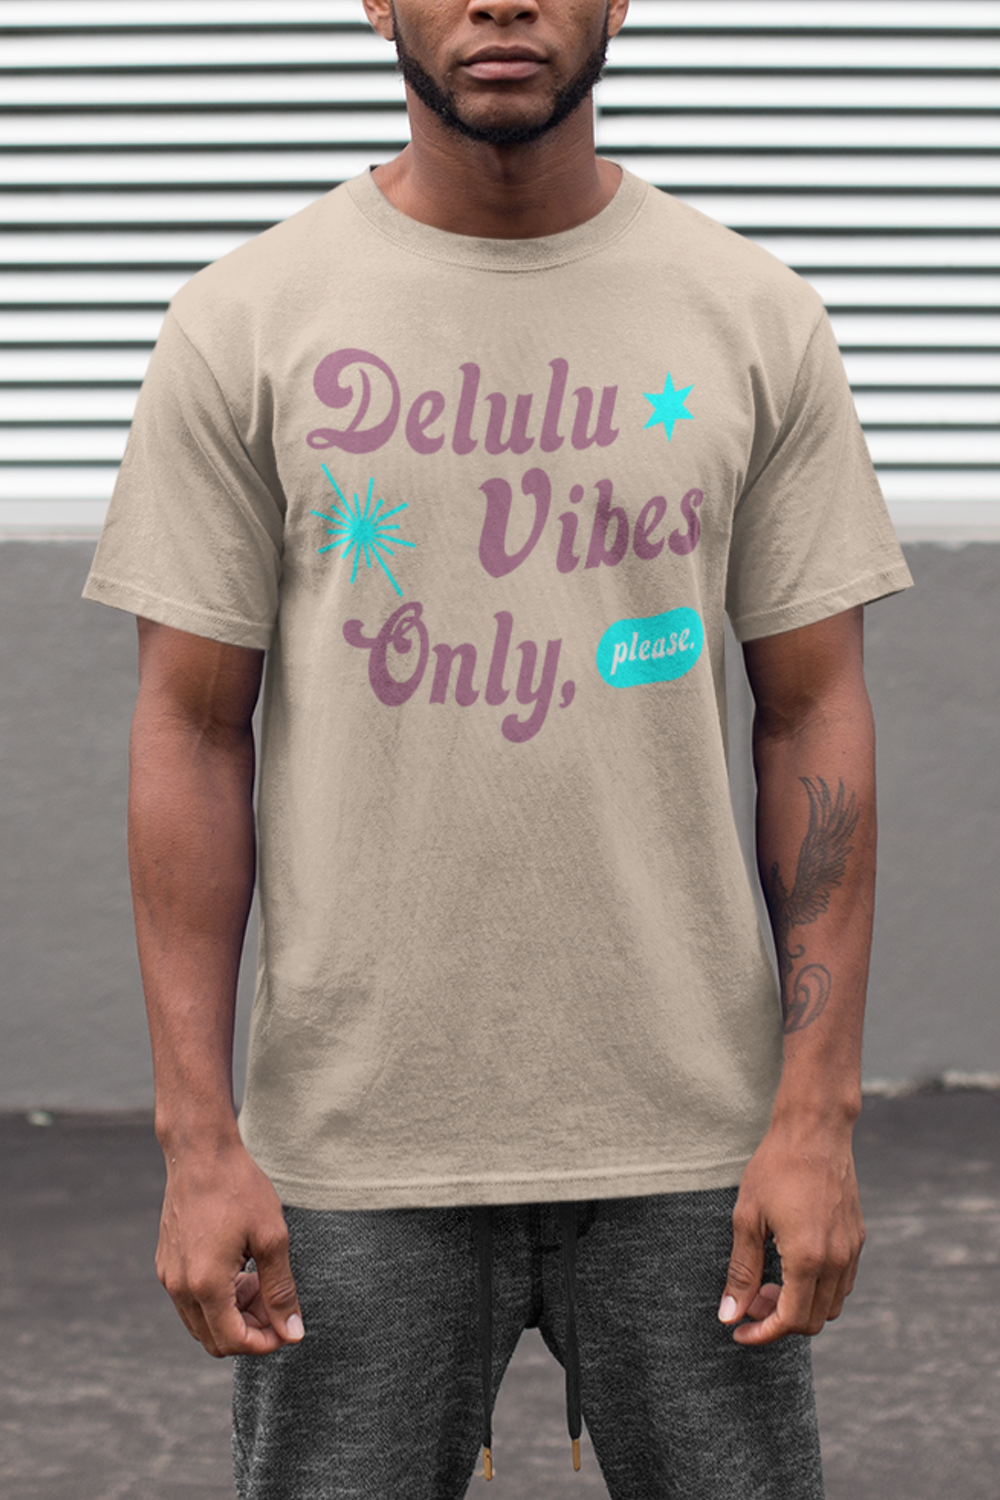 Delulu Vibes Only Please Men's Classic T-Shirt